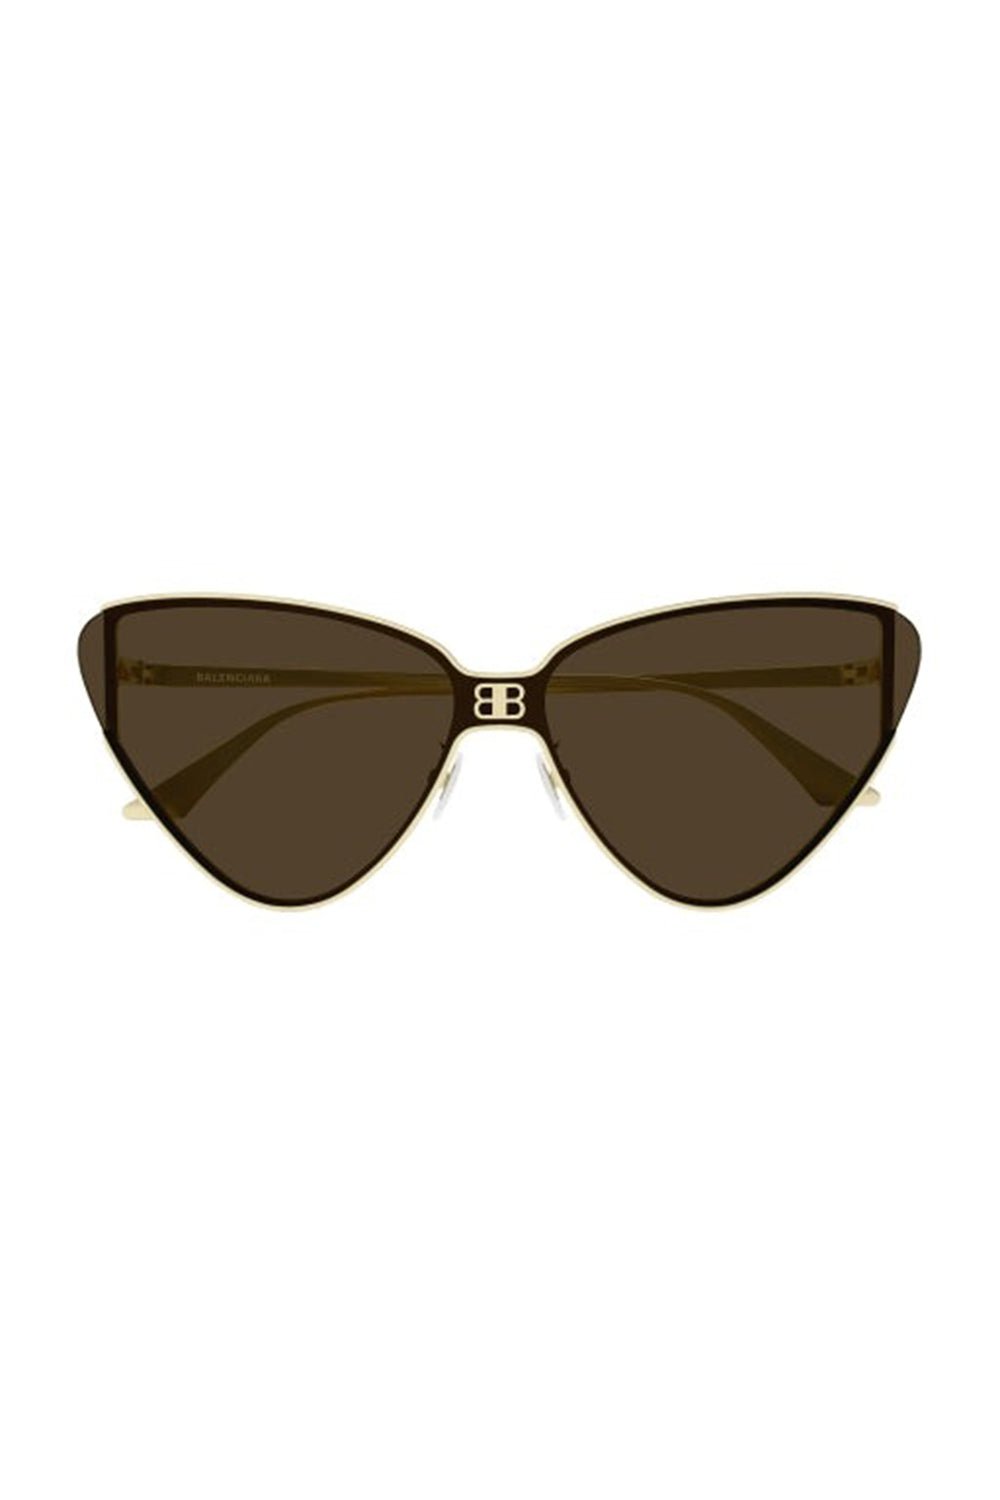 BALENCIAGA-Exaggerated Cat Eye Sunglasses-GOLD